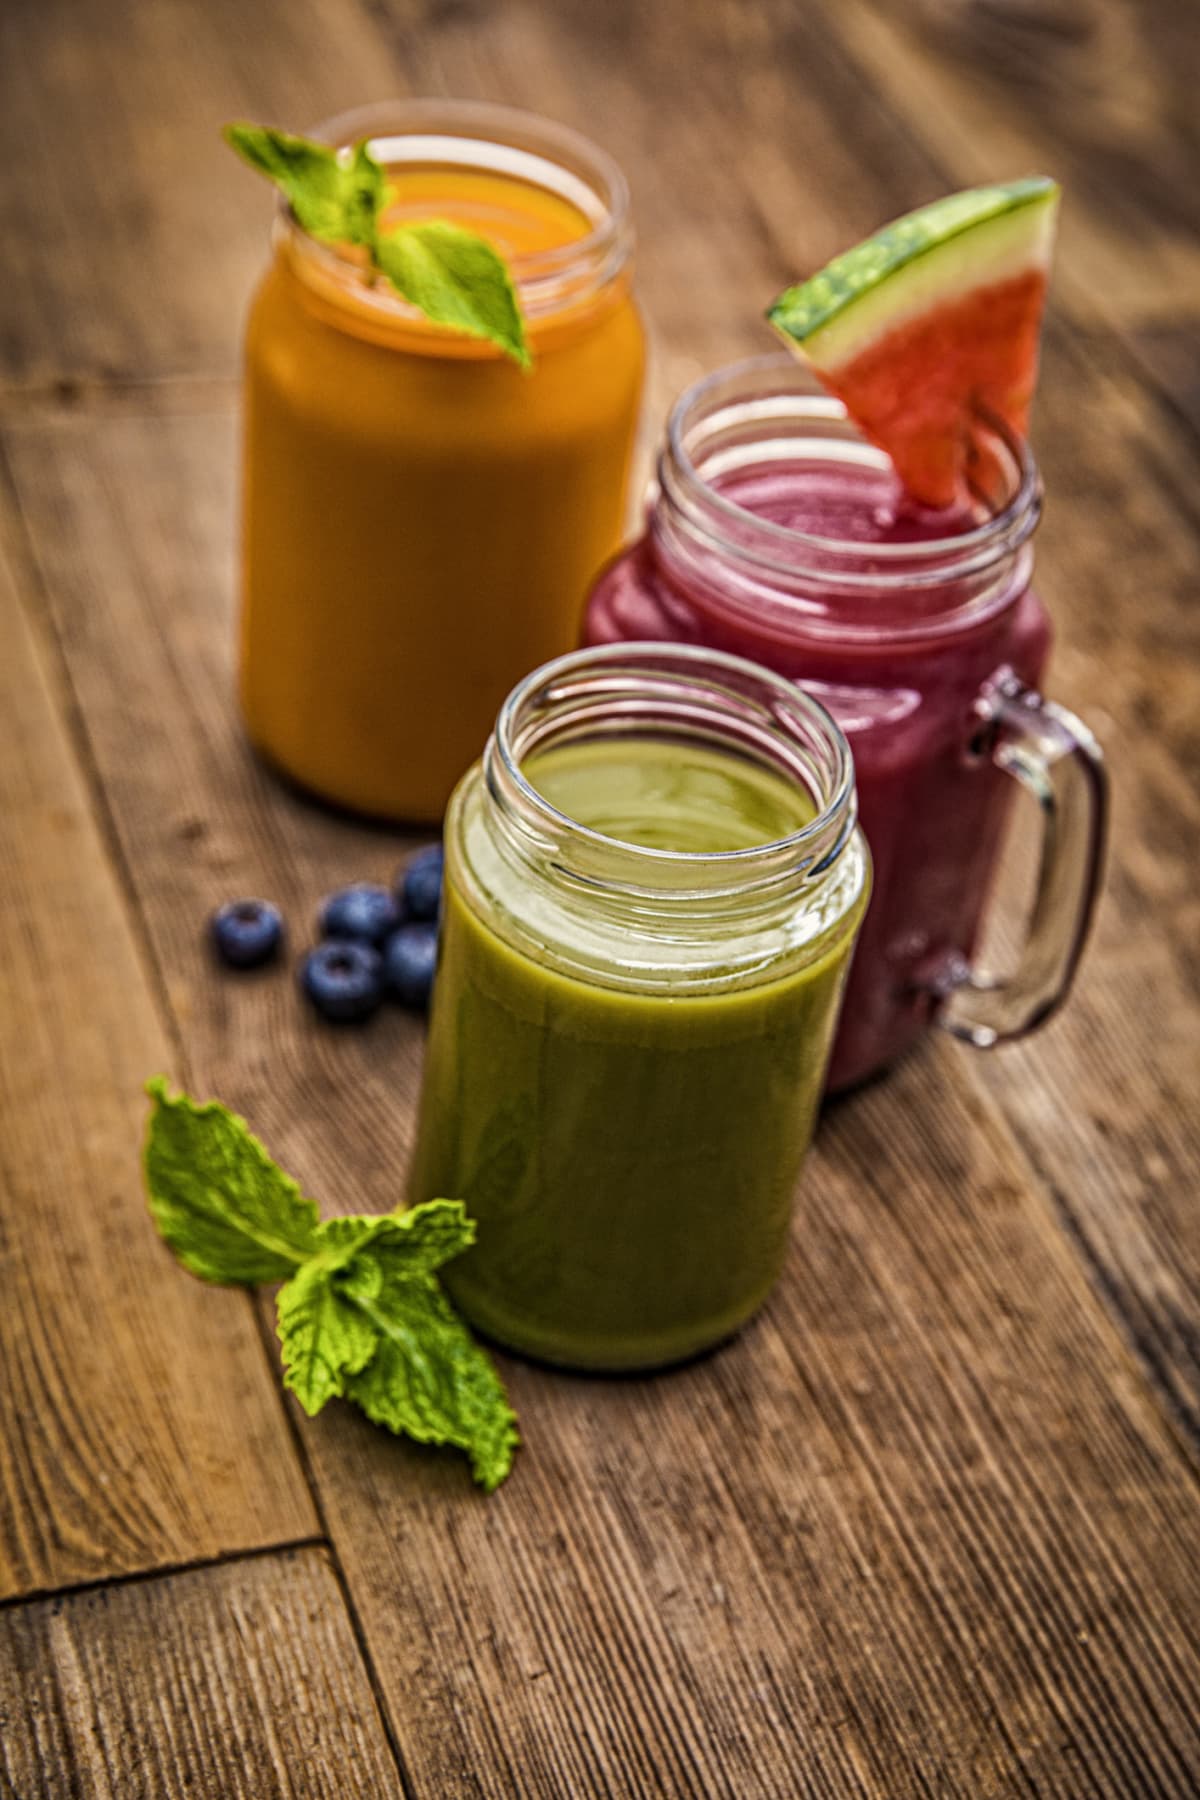 Three types of juice in glass jars